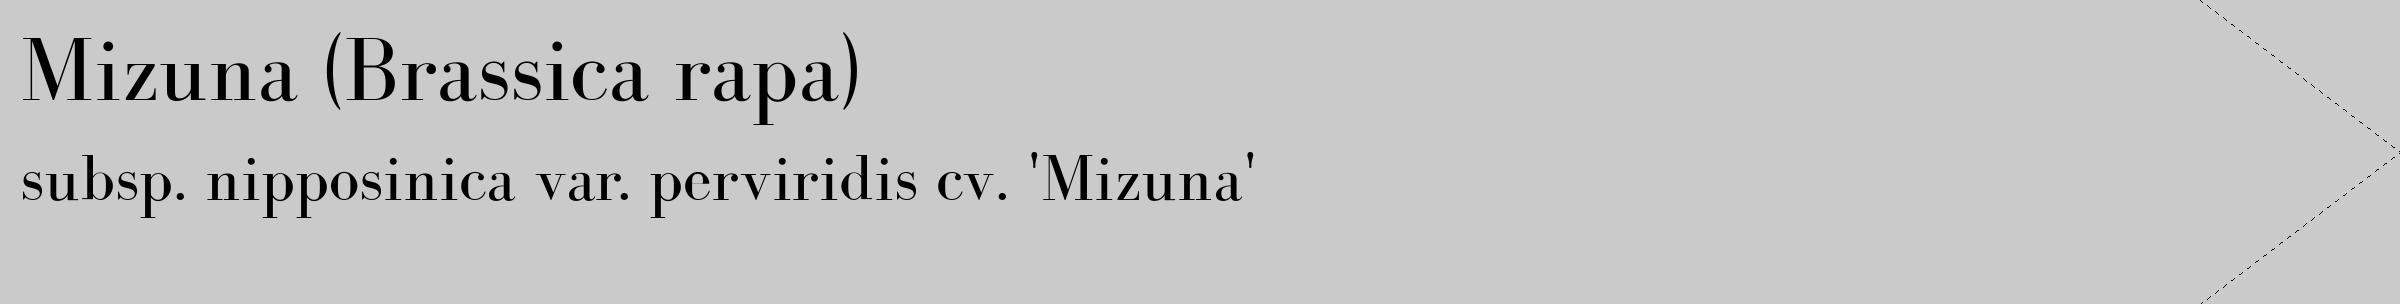 Étiquette de : Brassica rapa subsp. nipposinica var. perviridis cv. 'Mizuna' - format c - style noire21_simple_simplebod avec comestibilité